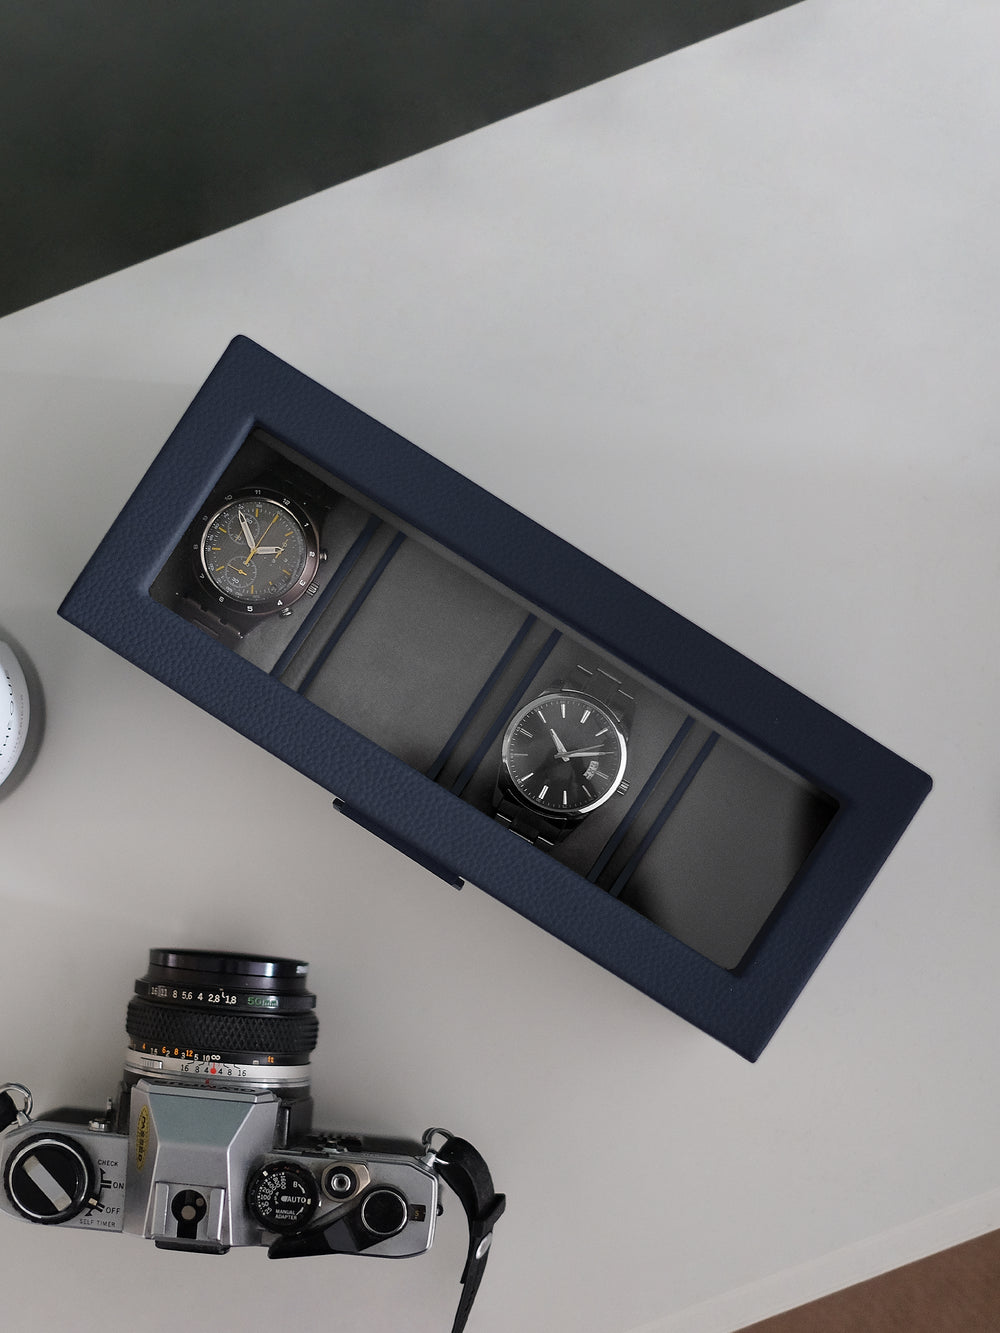 4 piece Watch Box - Navy Blue & Grey